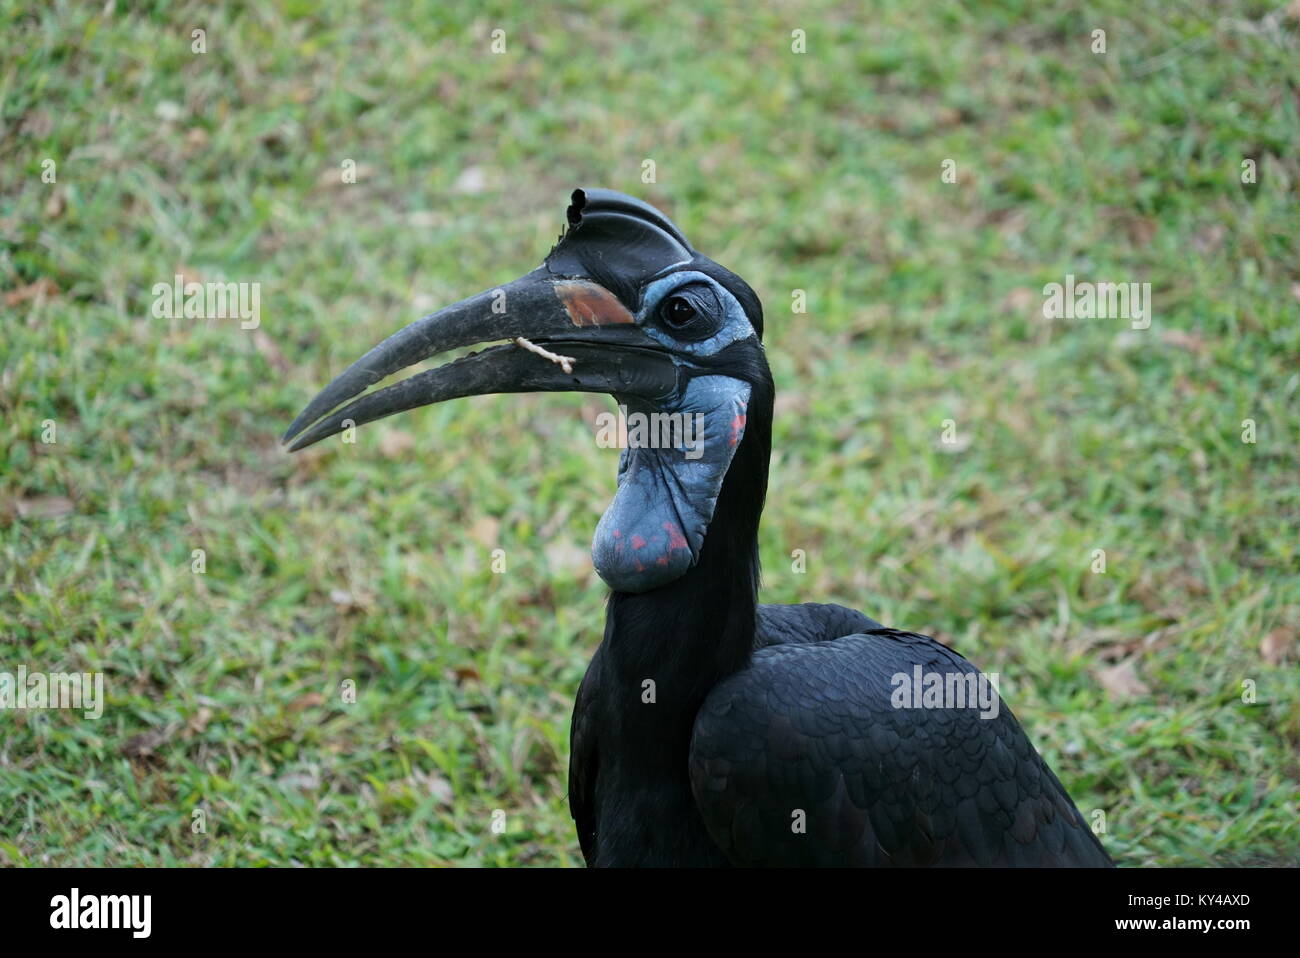 Black Hornbill Bird with Twig Stock Photo